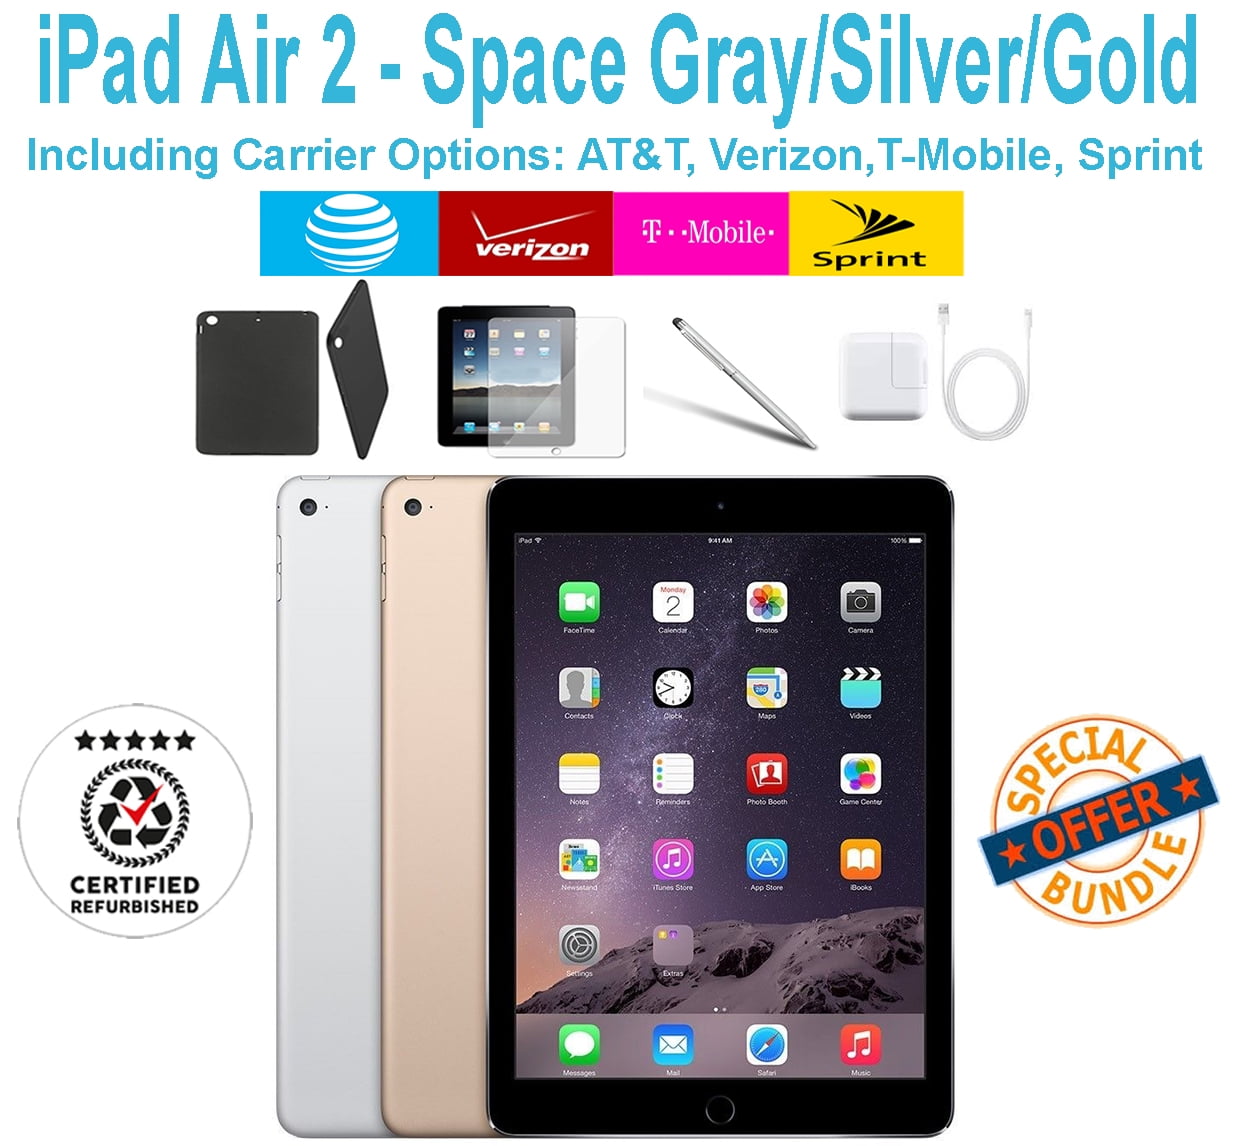 Certified Refurbished) Apple iPad Air 1 -128GB Space Gray - WiFi 